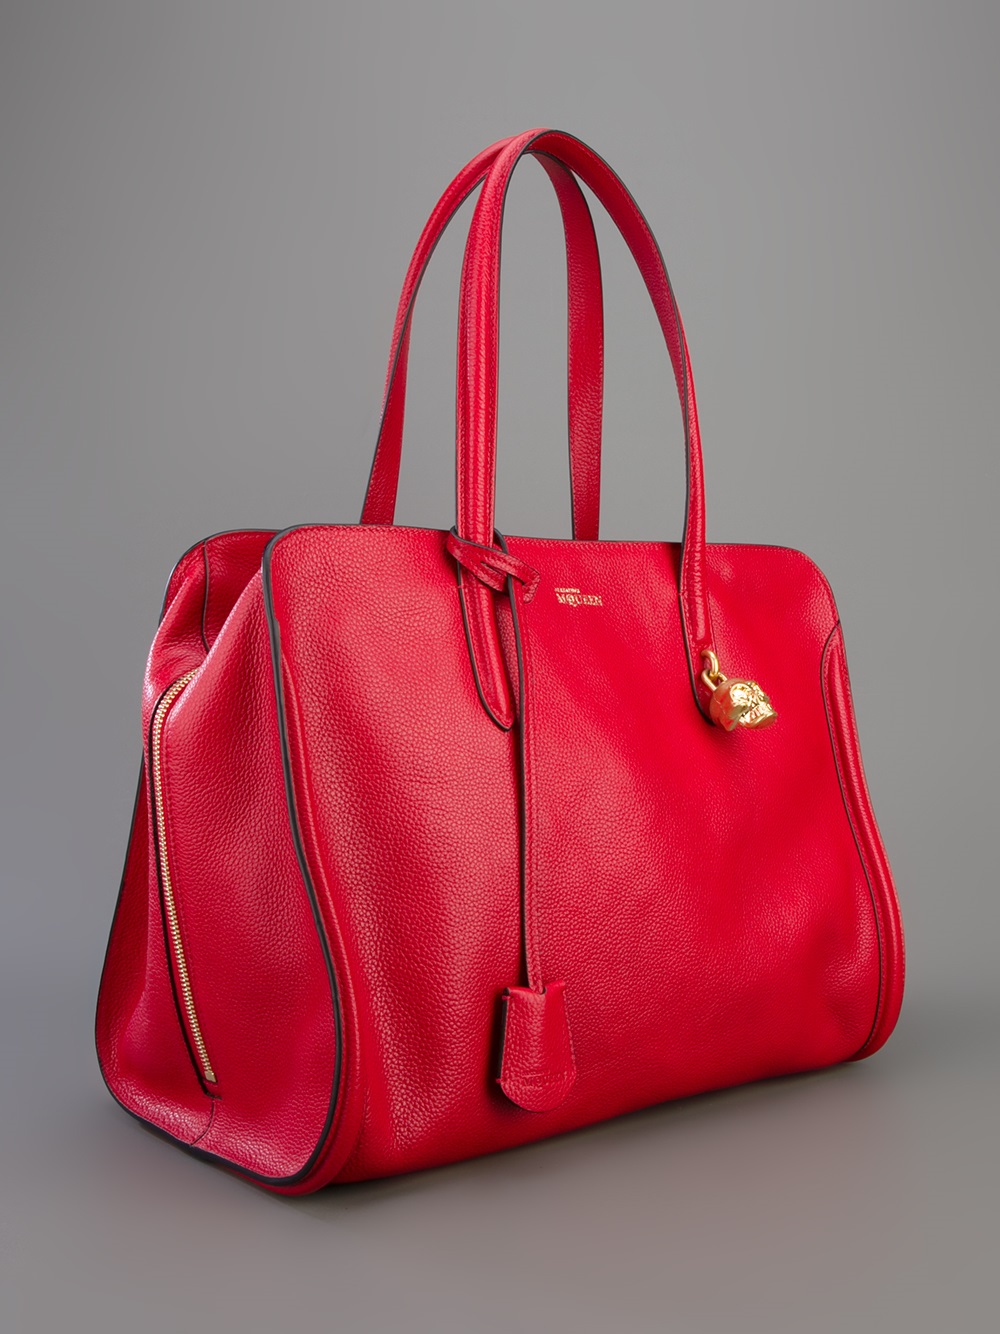 Alexander McQueen Leather Skull Padlock Bag in Red - Lyst